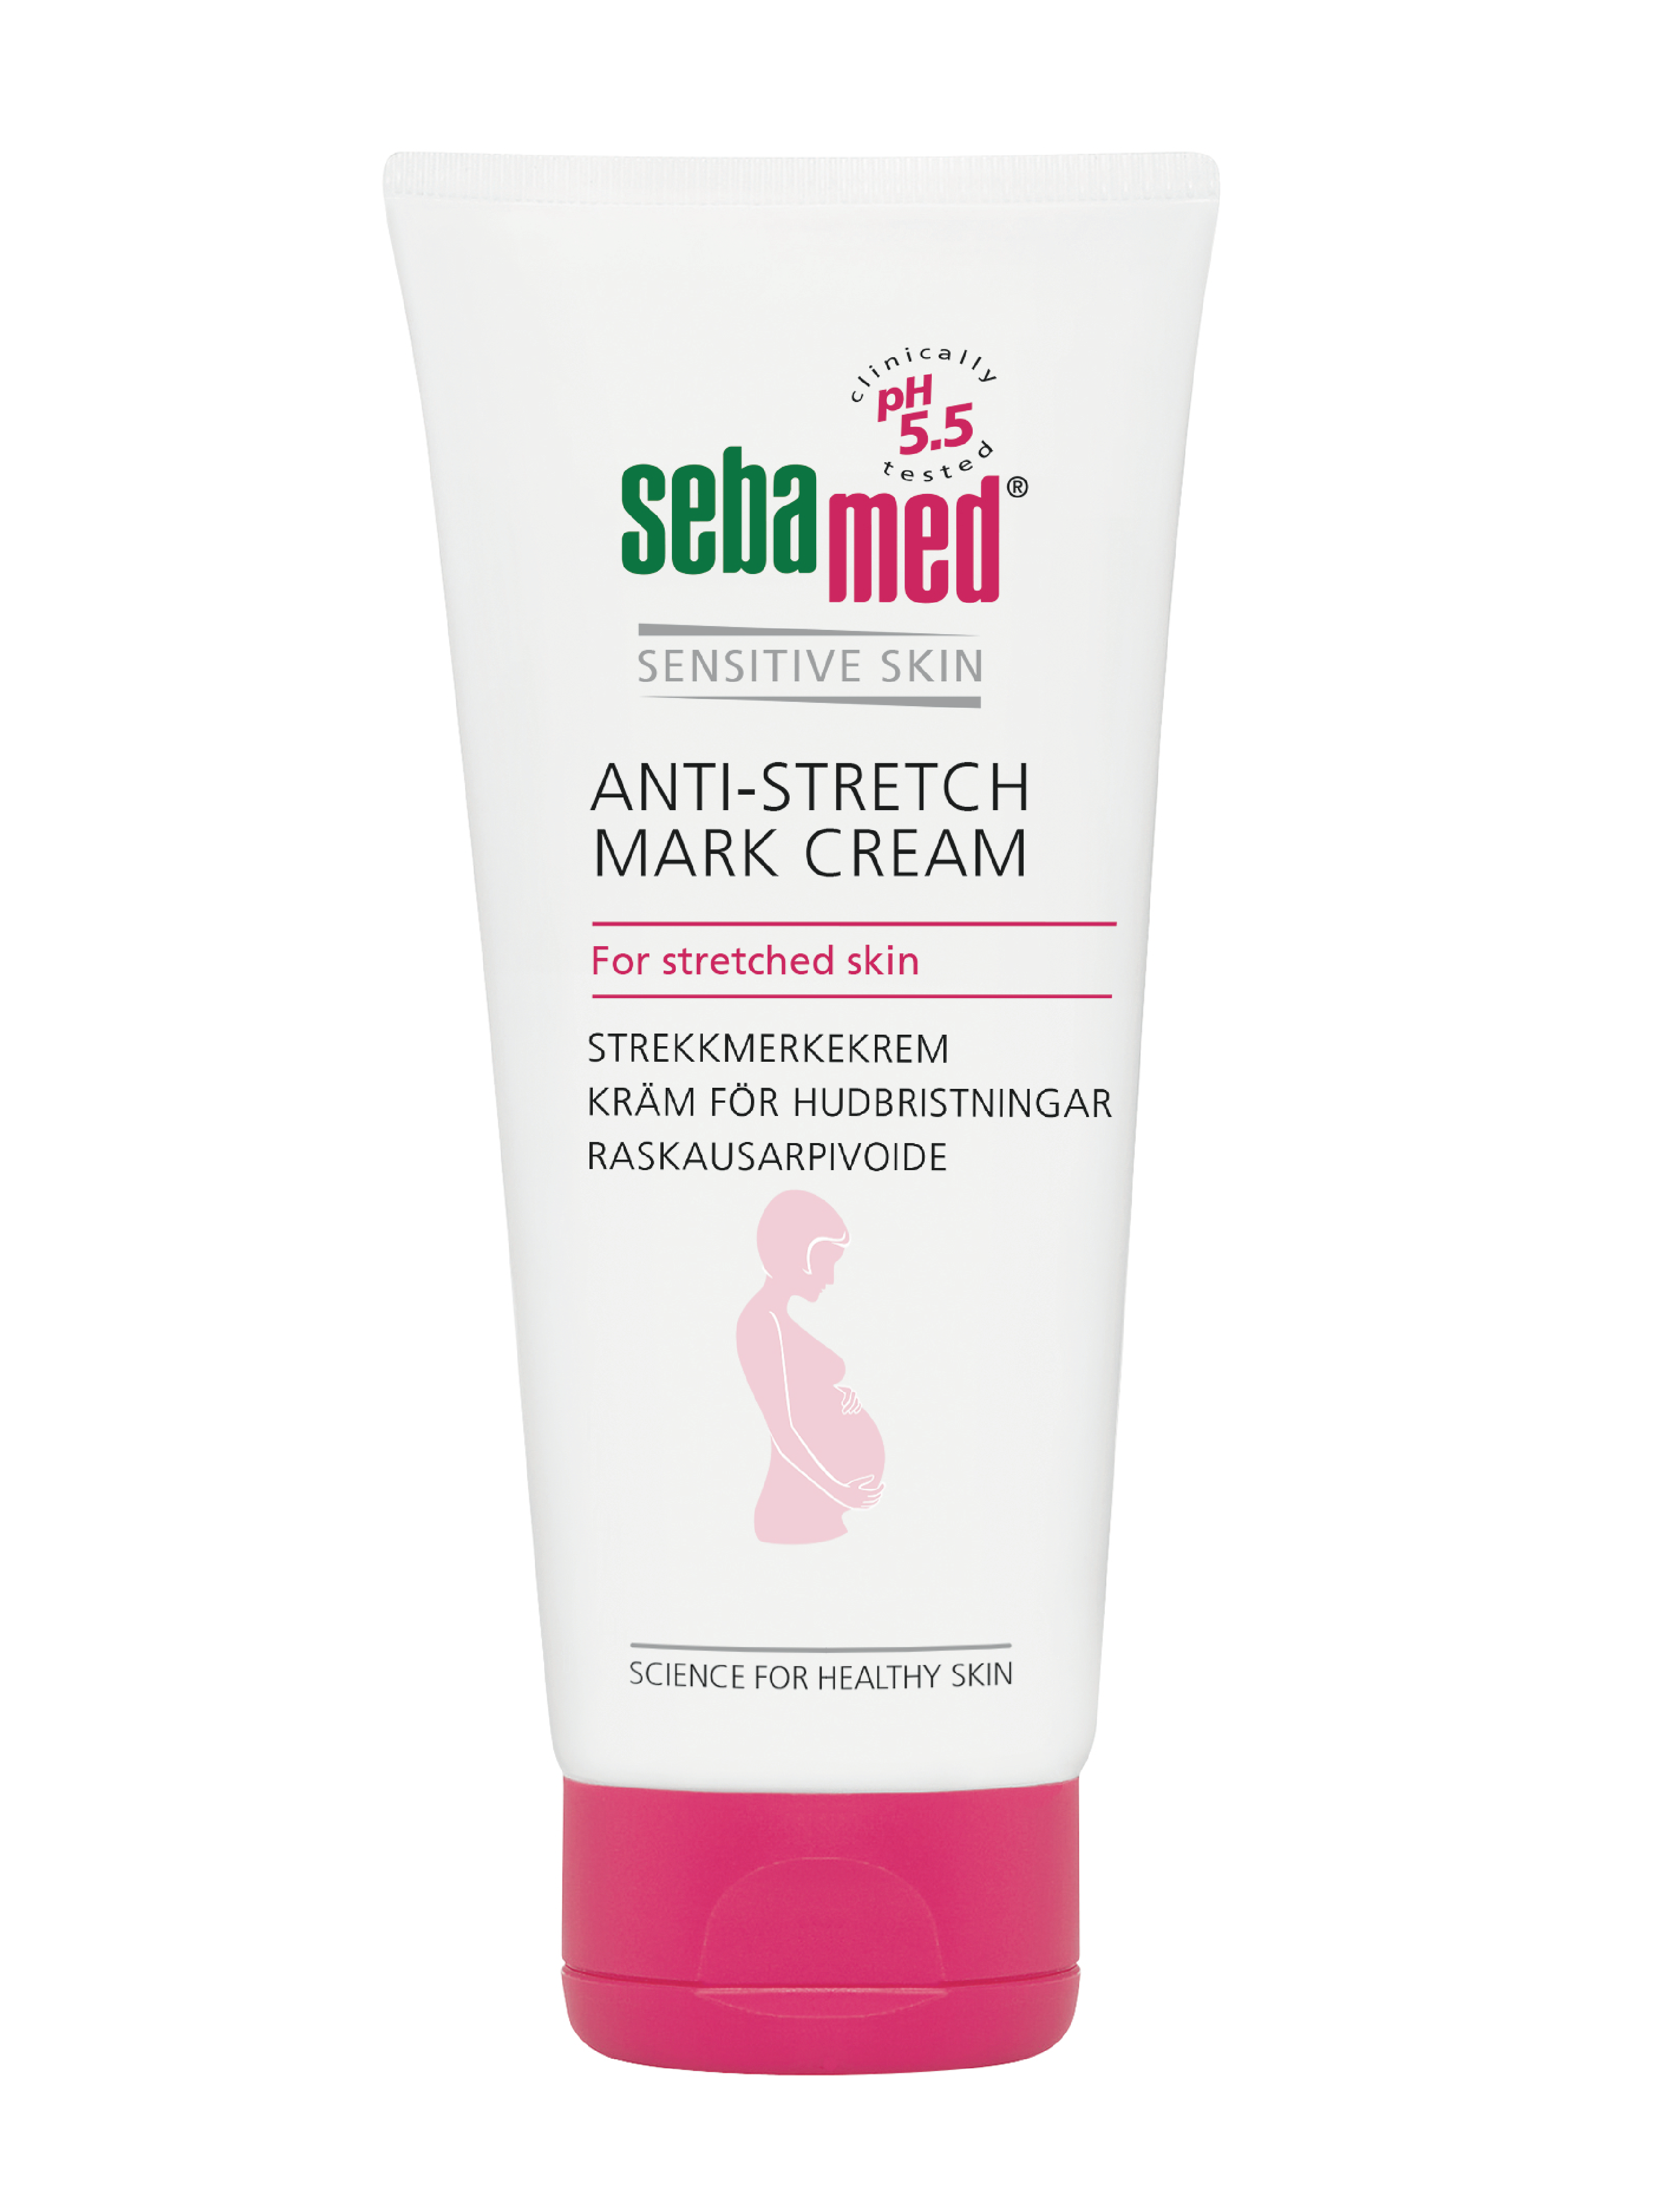 SebaMed Anti-Stretchmark Cream, 200 ml